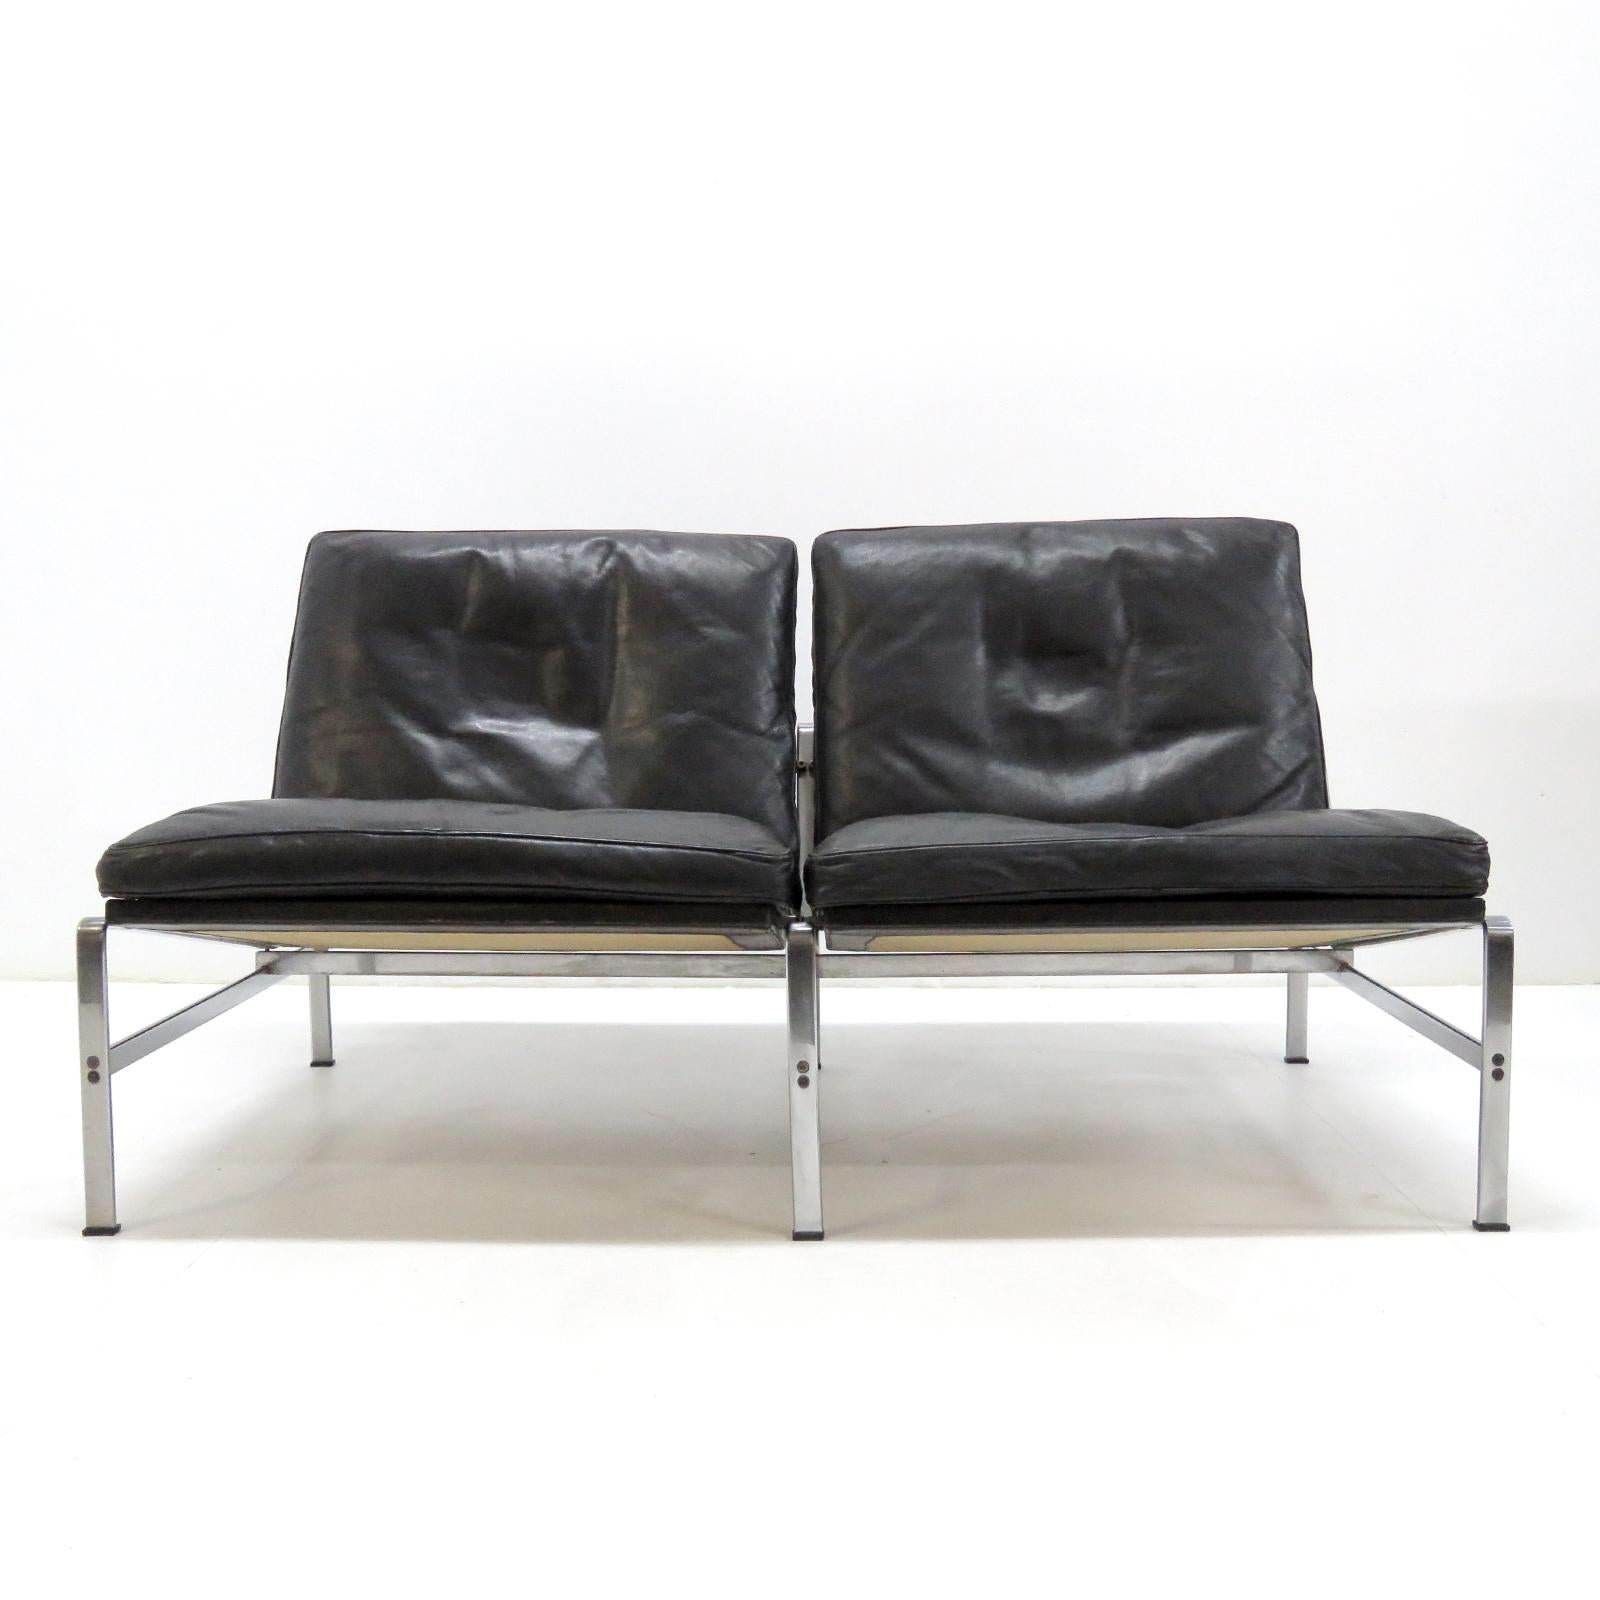 wonderful Jørgen Kastholm & Preben Fabricius for Kill International, two seater sofa model ‘FK 6720’, in original black leather and steel, designed in 1965.